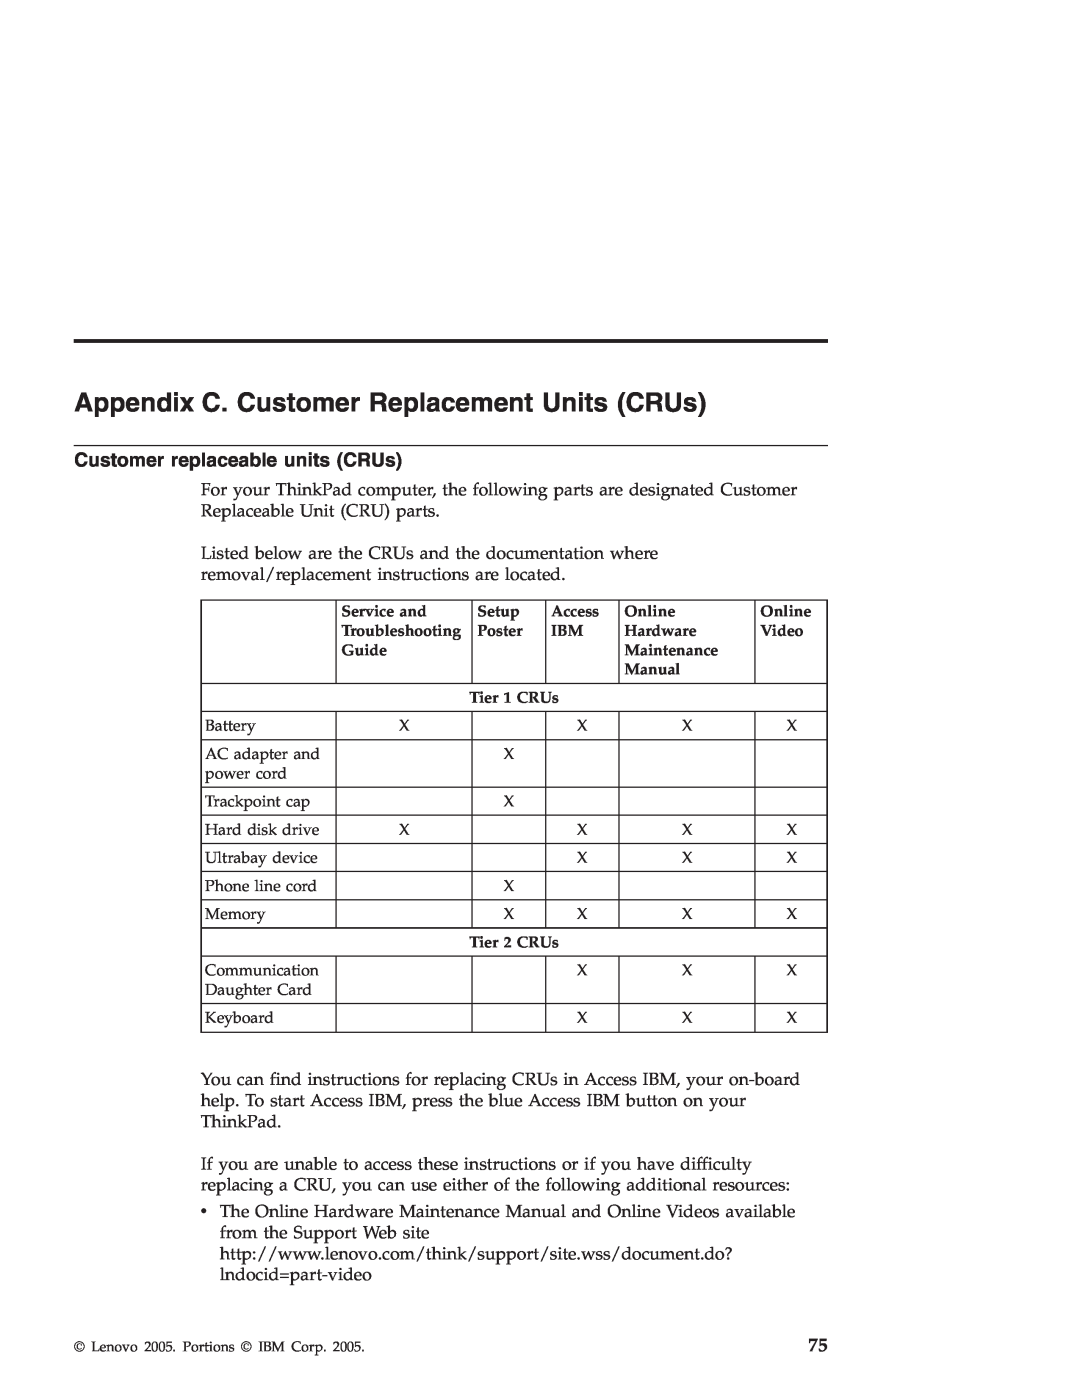 Lenovo R50 manual Appendix C. Customer Replacement Units CRUs, Customer replaceable units CRUs 